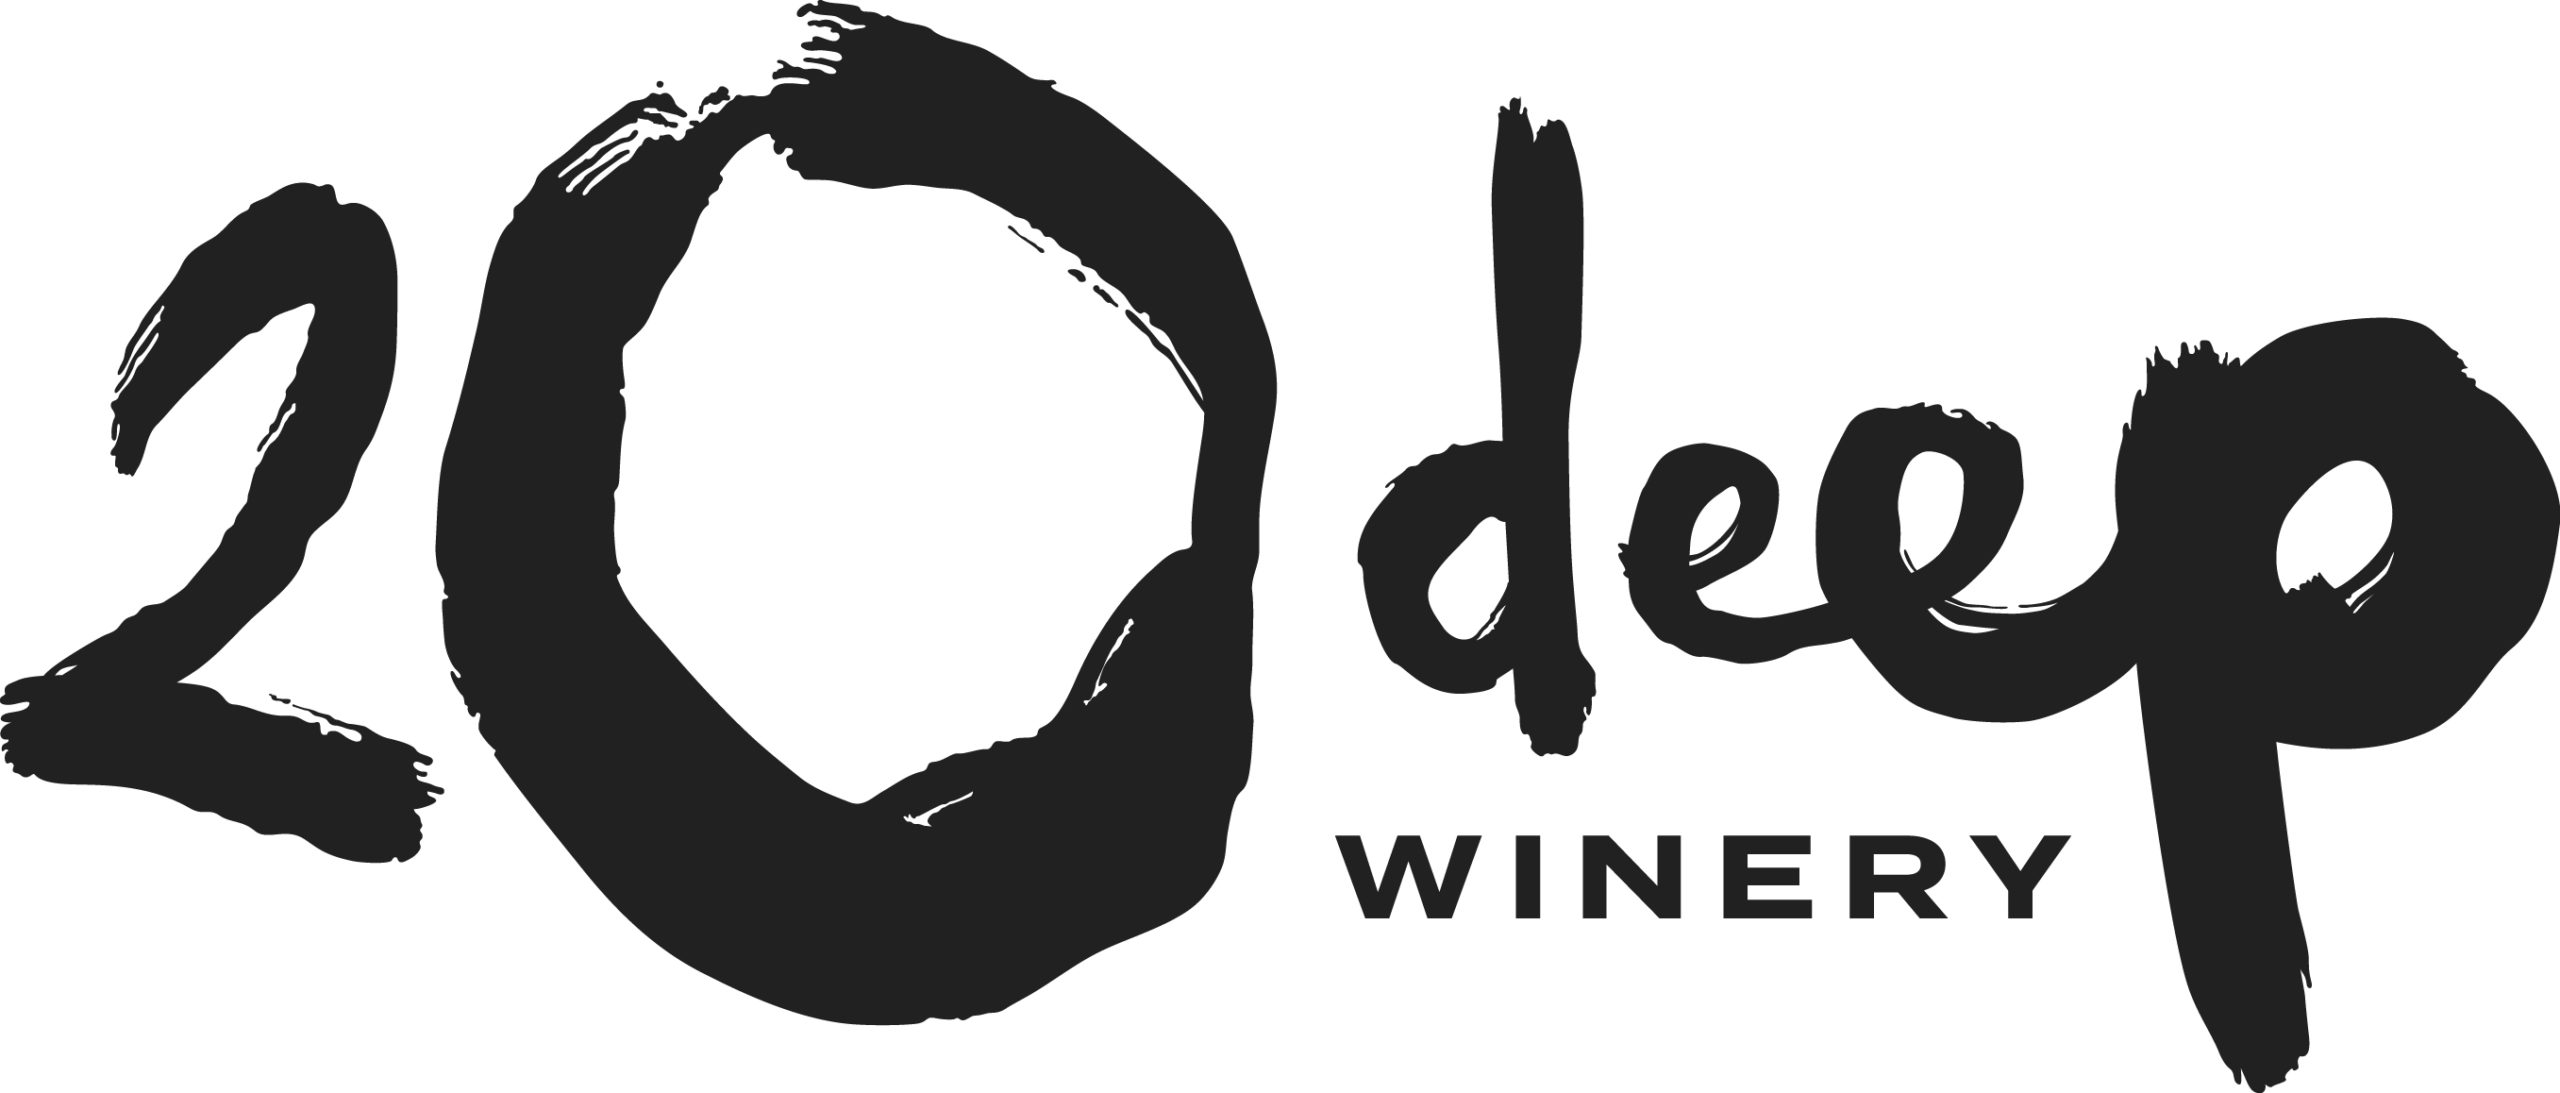 20 Deep Winery